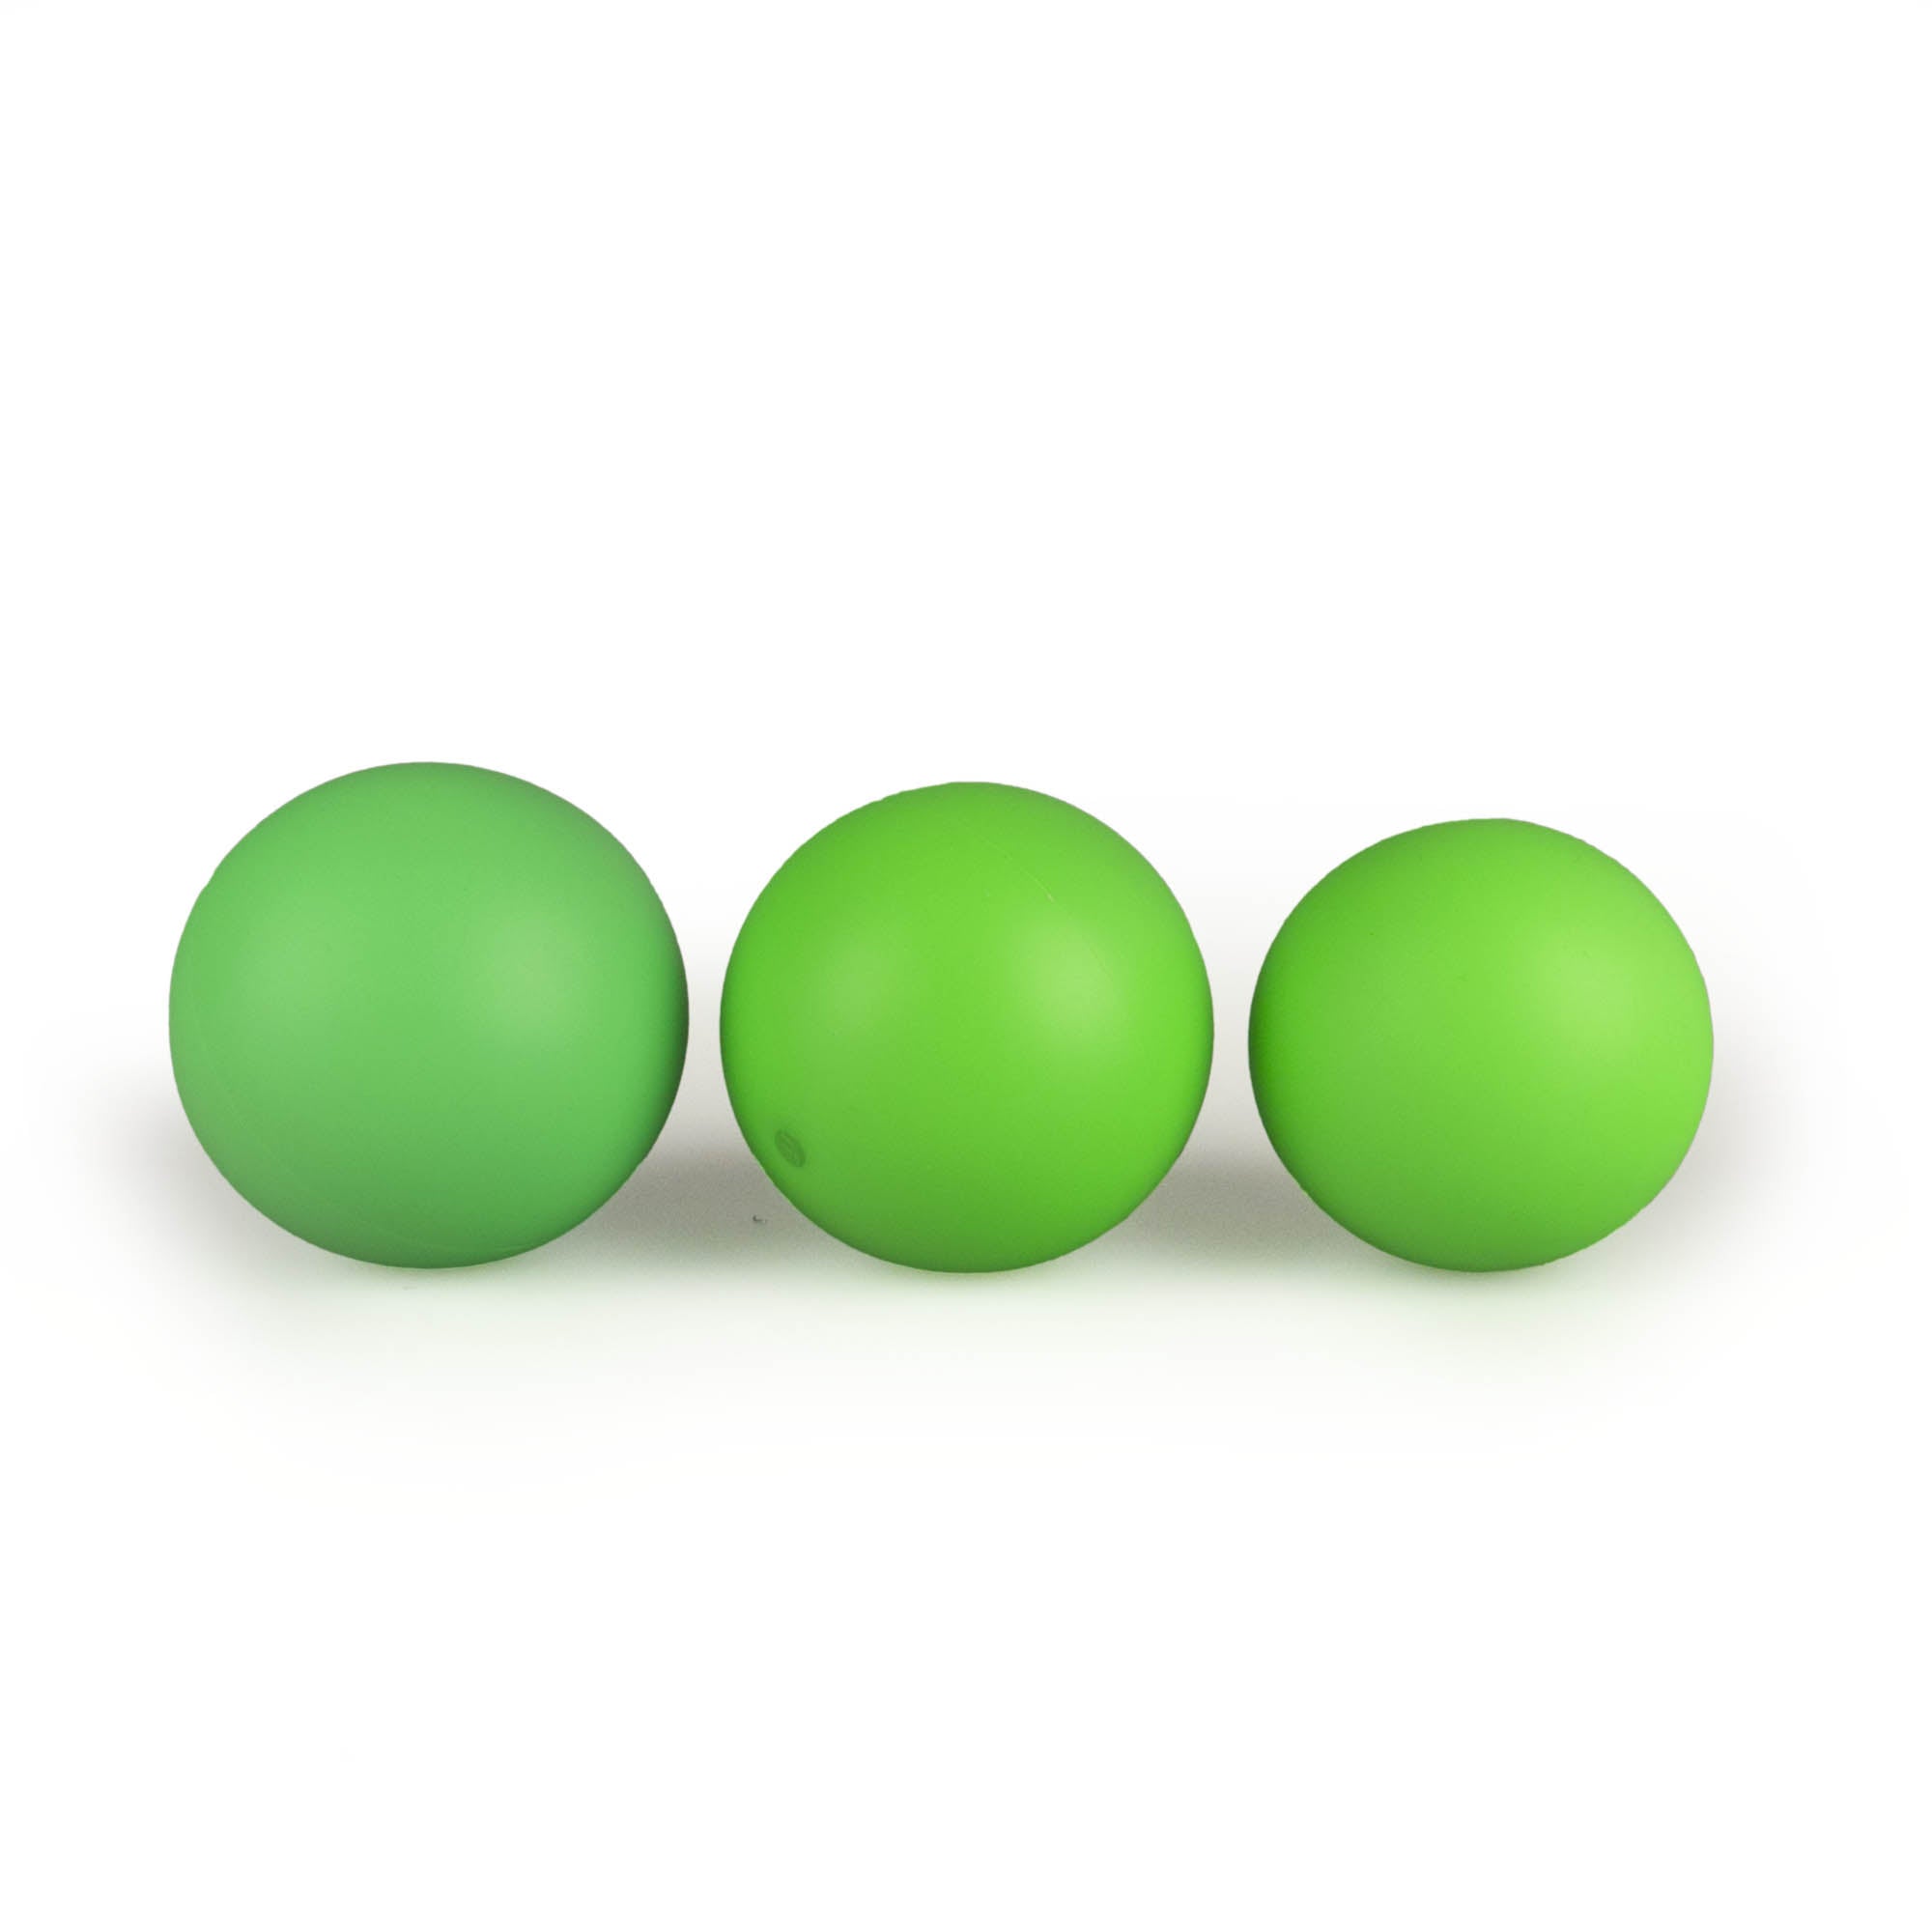 MMX juggling ball size comparison green